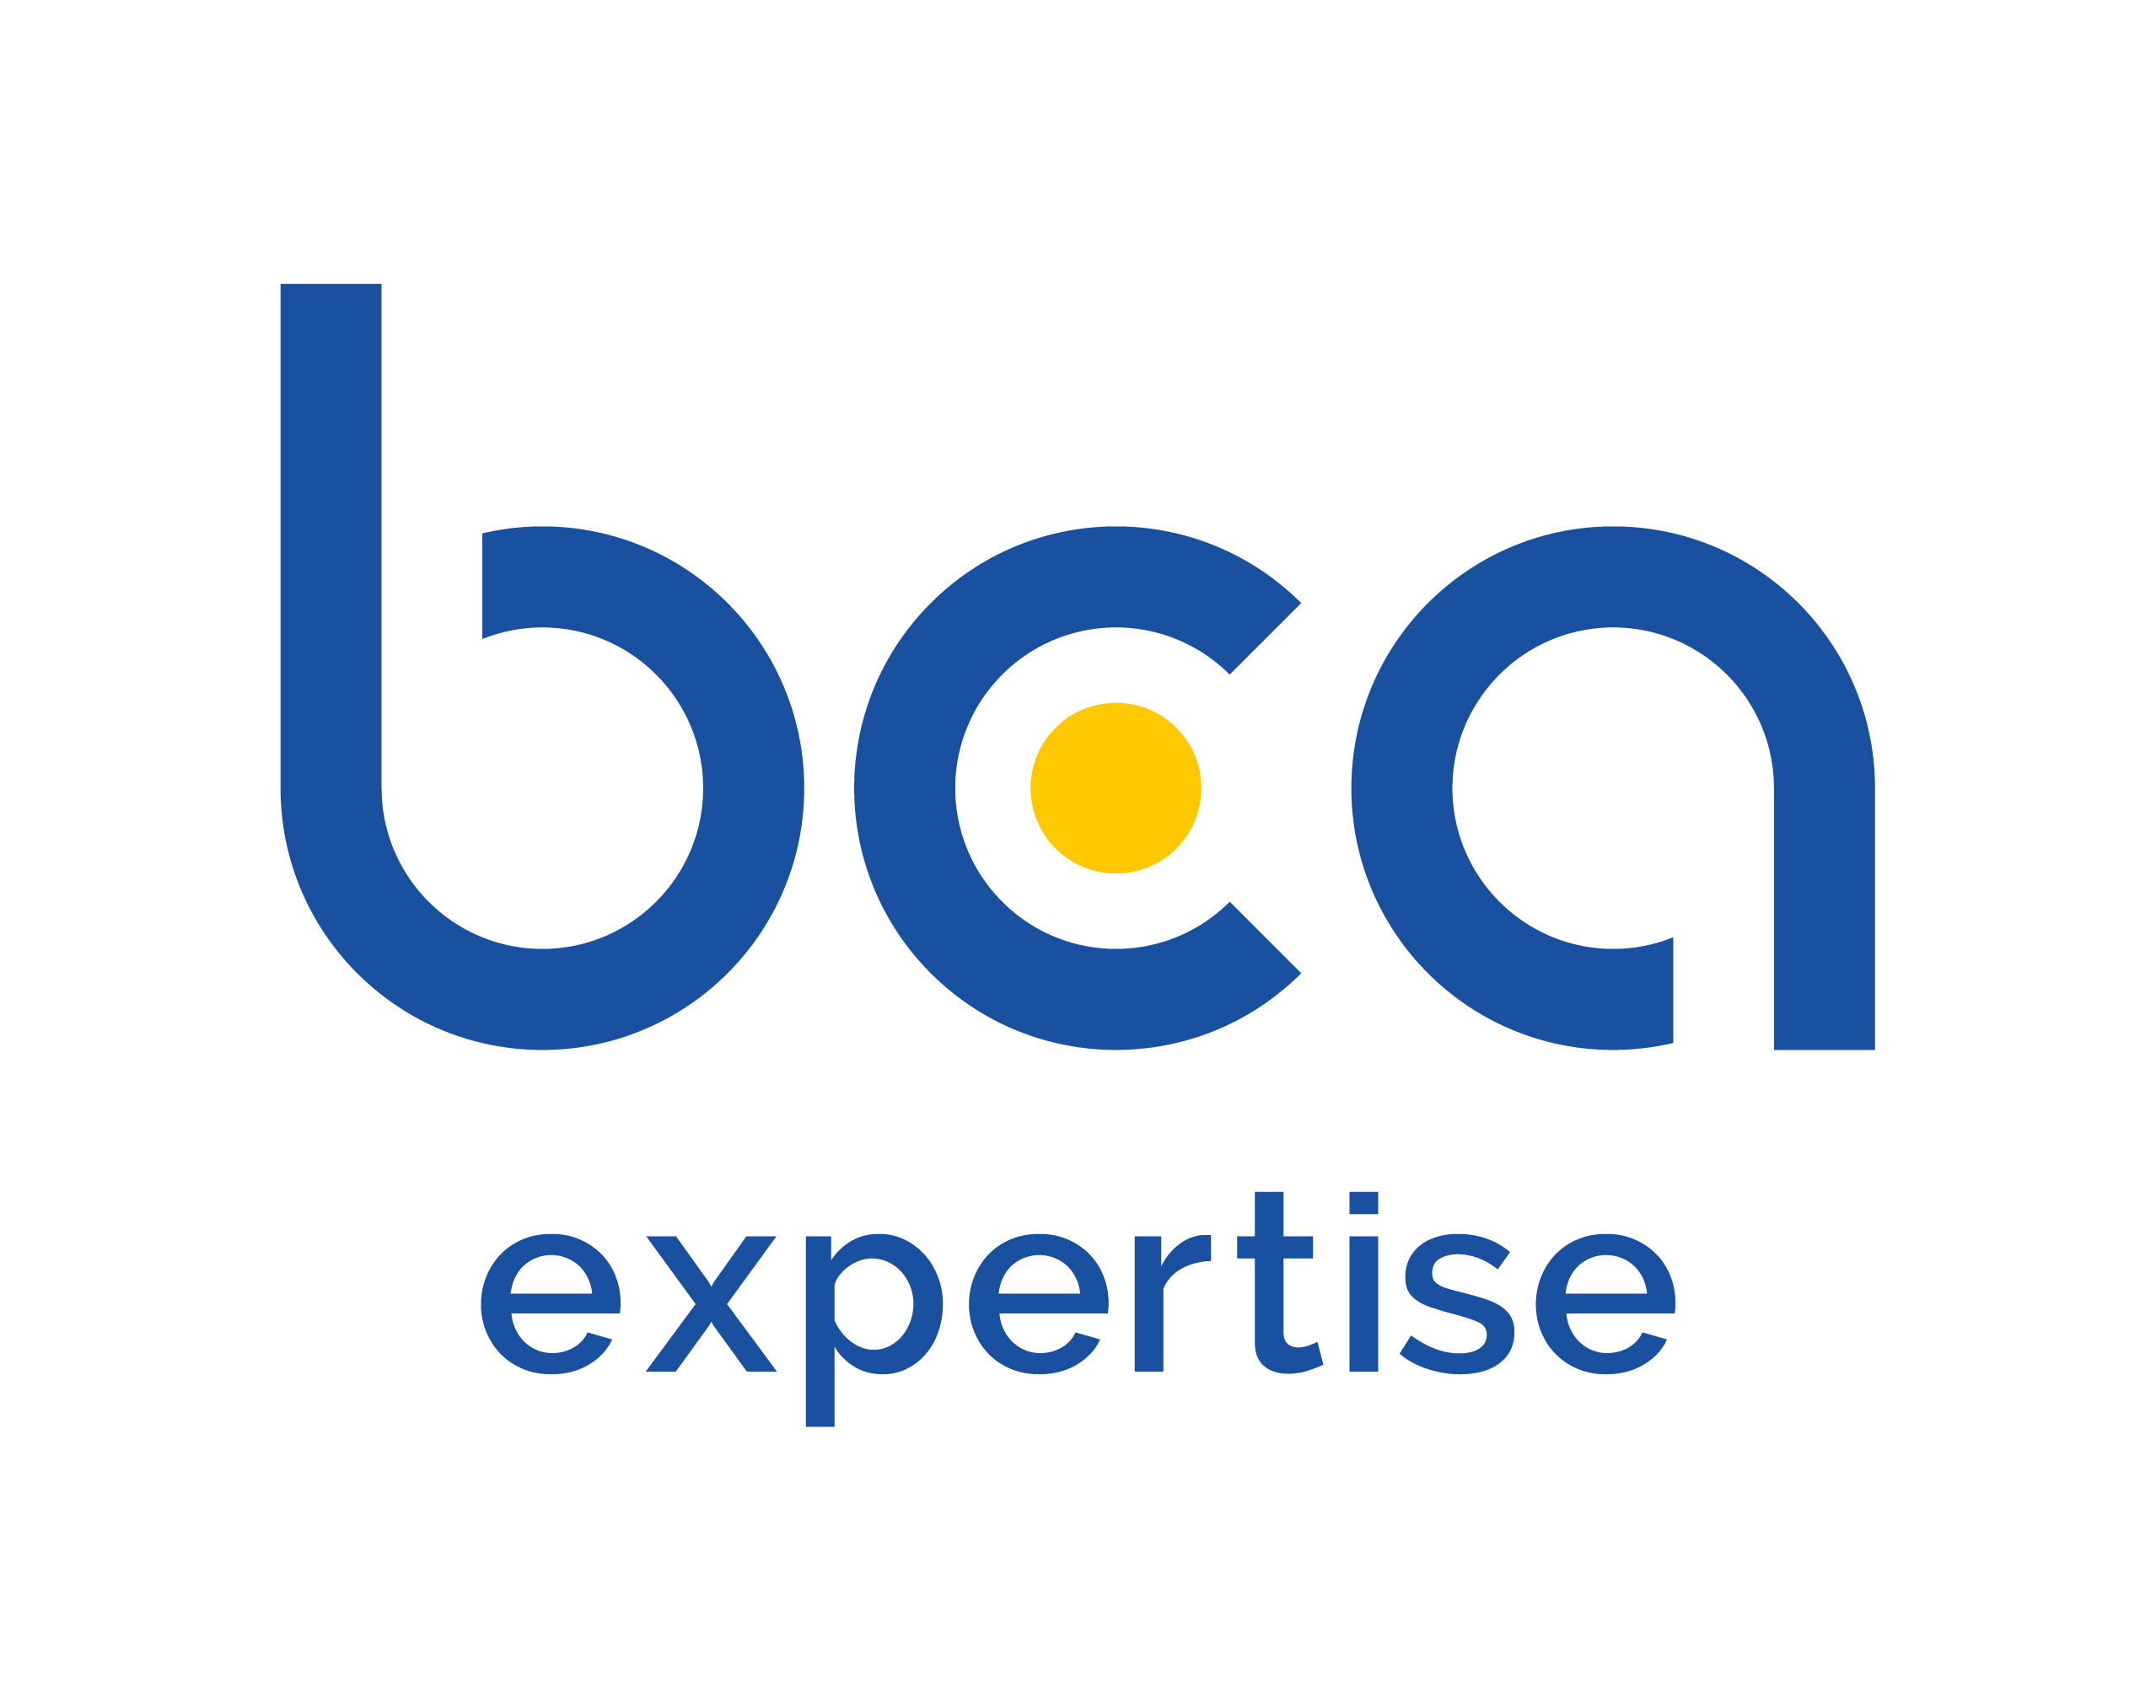 BCA EXPERTISE